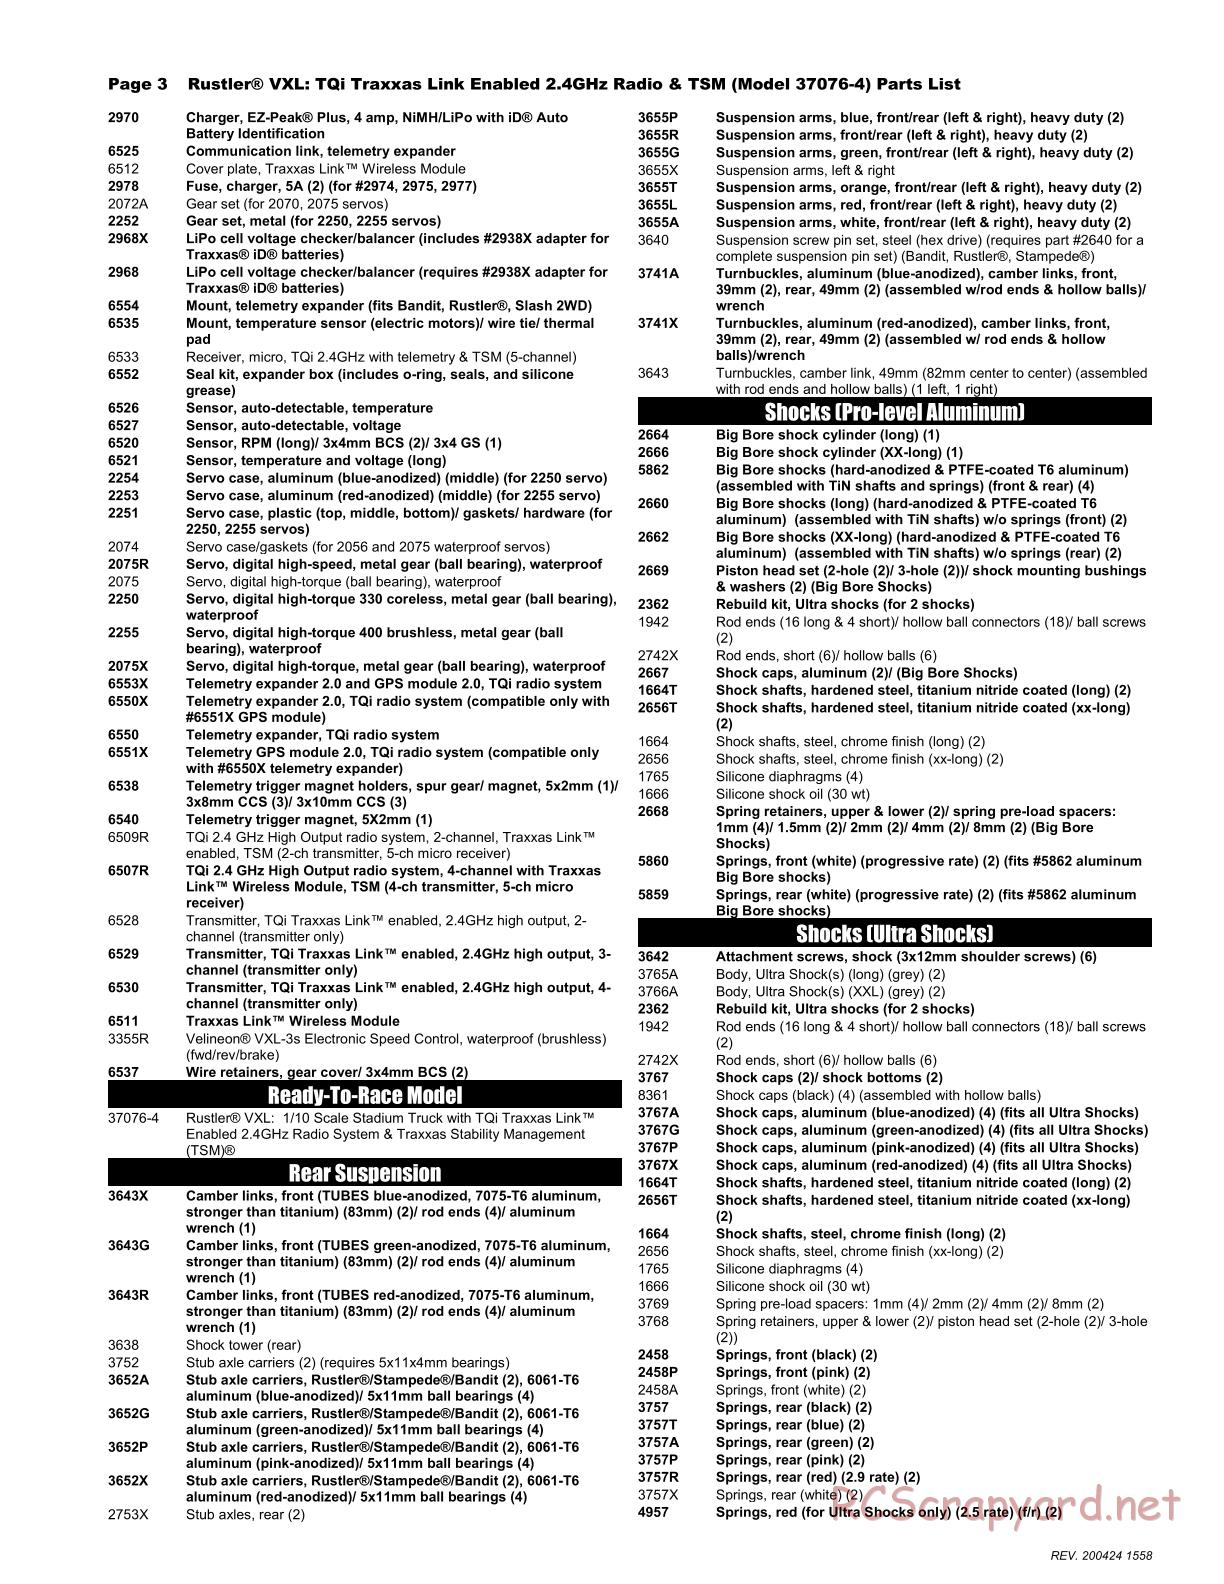 Traxxas - Rustler VXL TSM - Parts List - Page 3